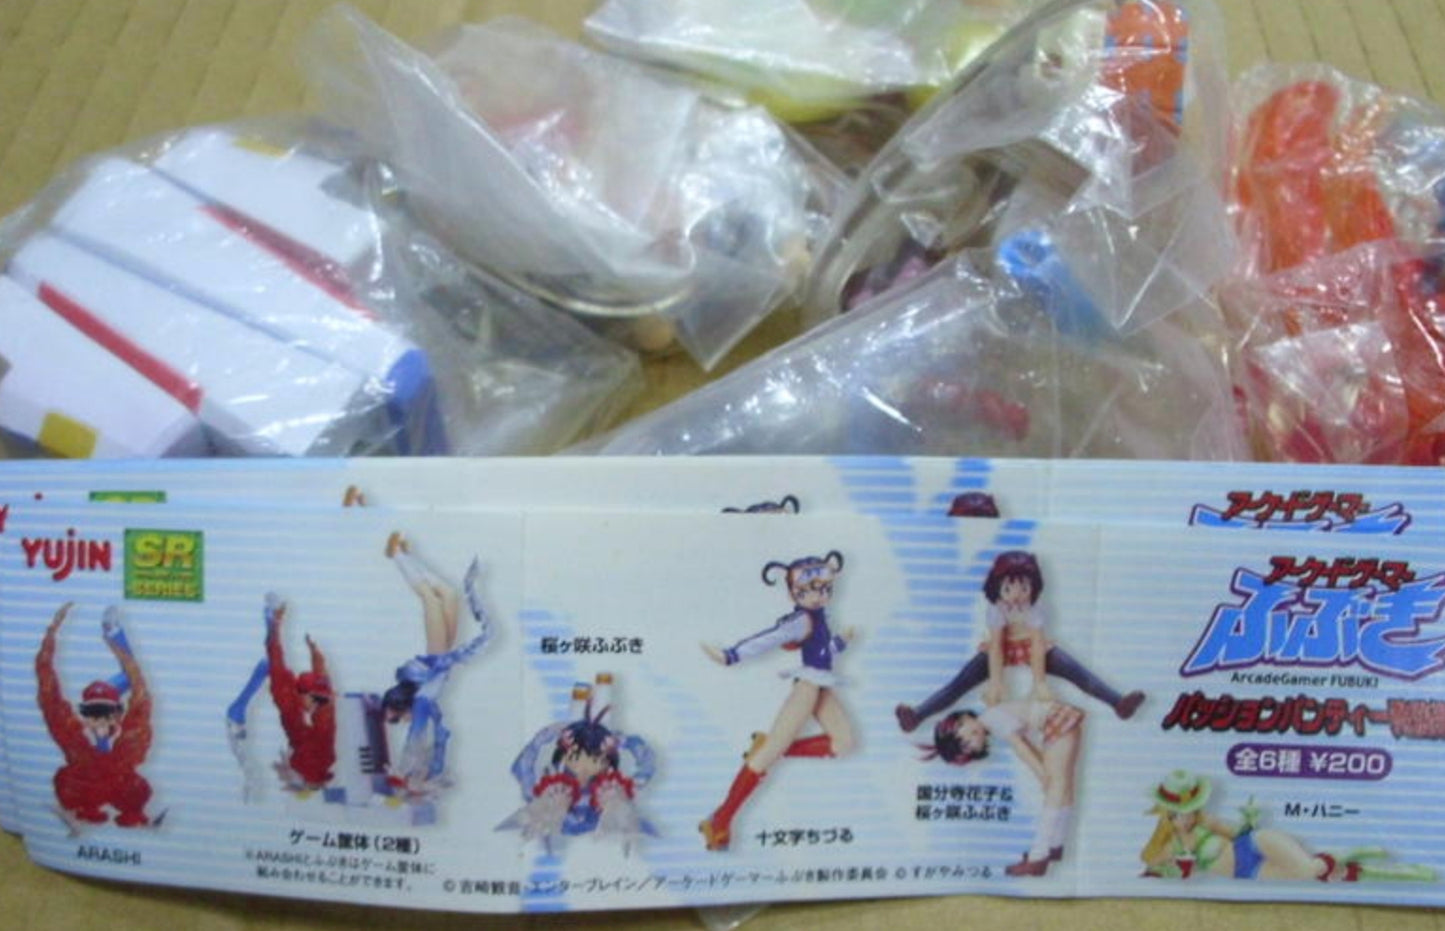 Yujin Arcade Gamer Fubuki Gashapon 6 Collection Figure Set